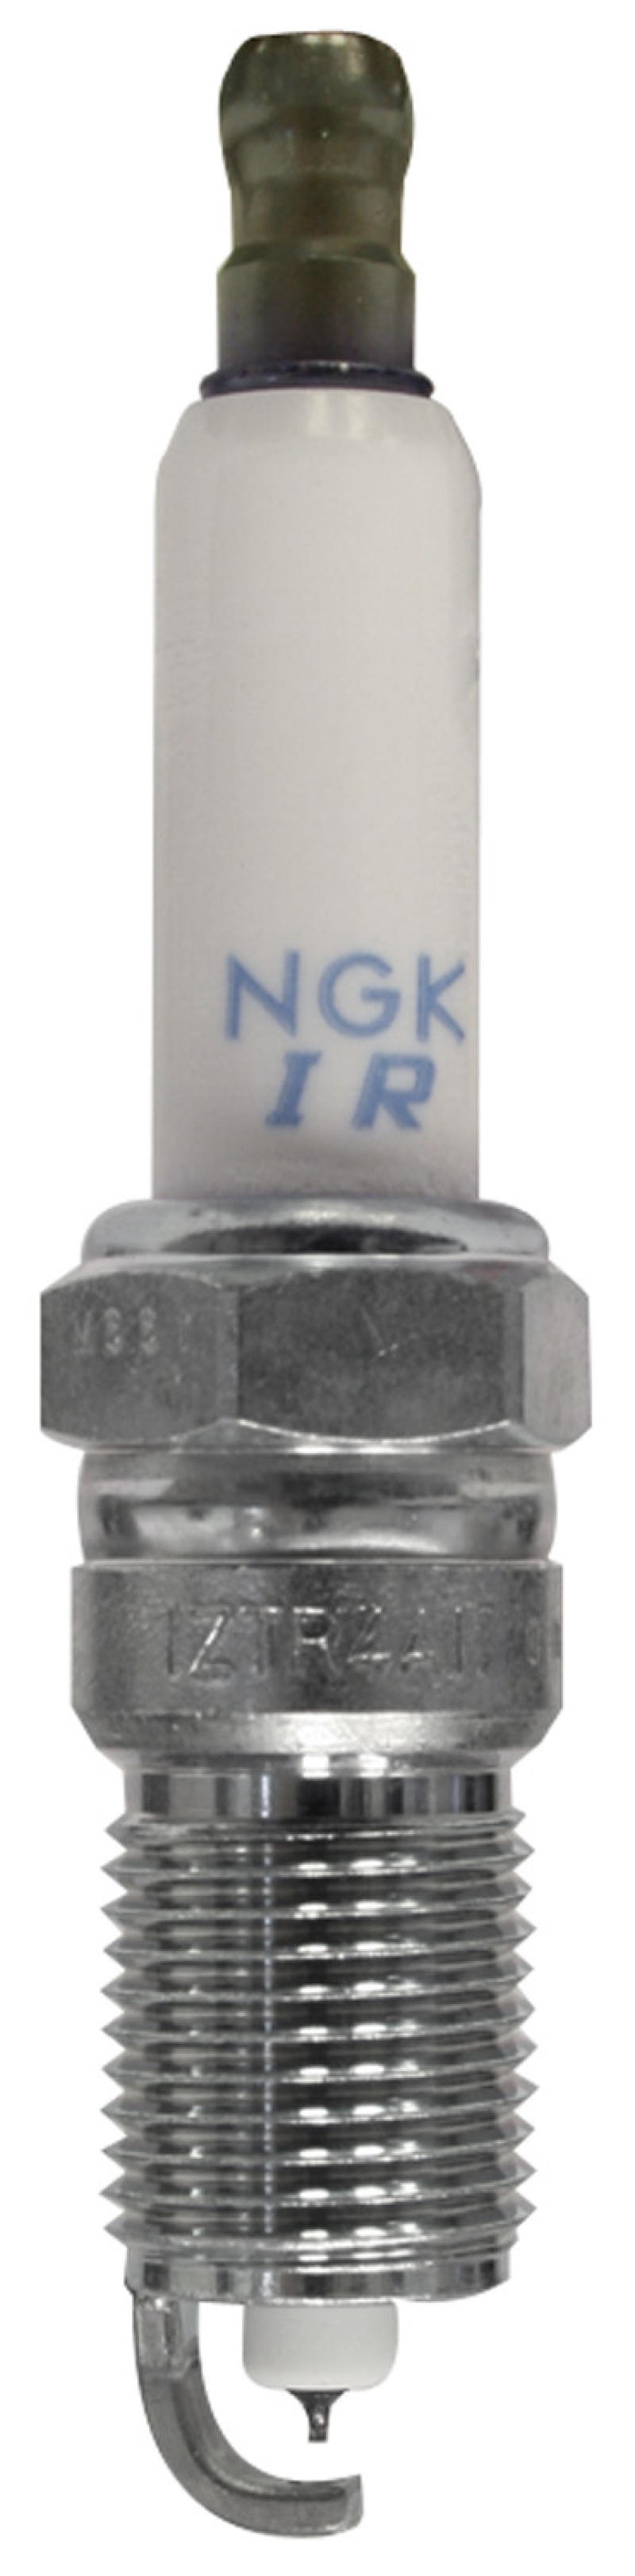 NGK Laser Iridium Spark Plug Box of 4 (IZTR4A11) - 4213